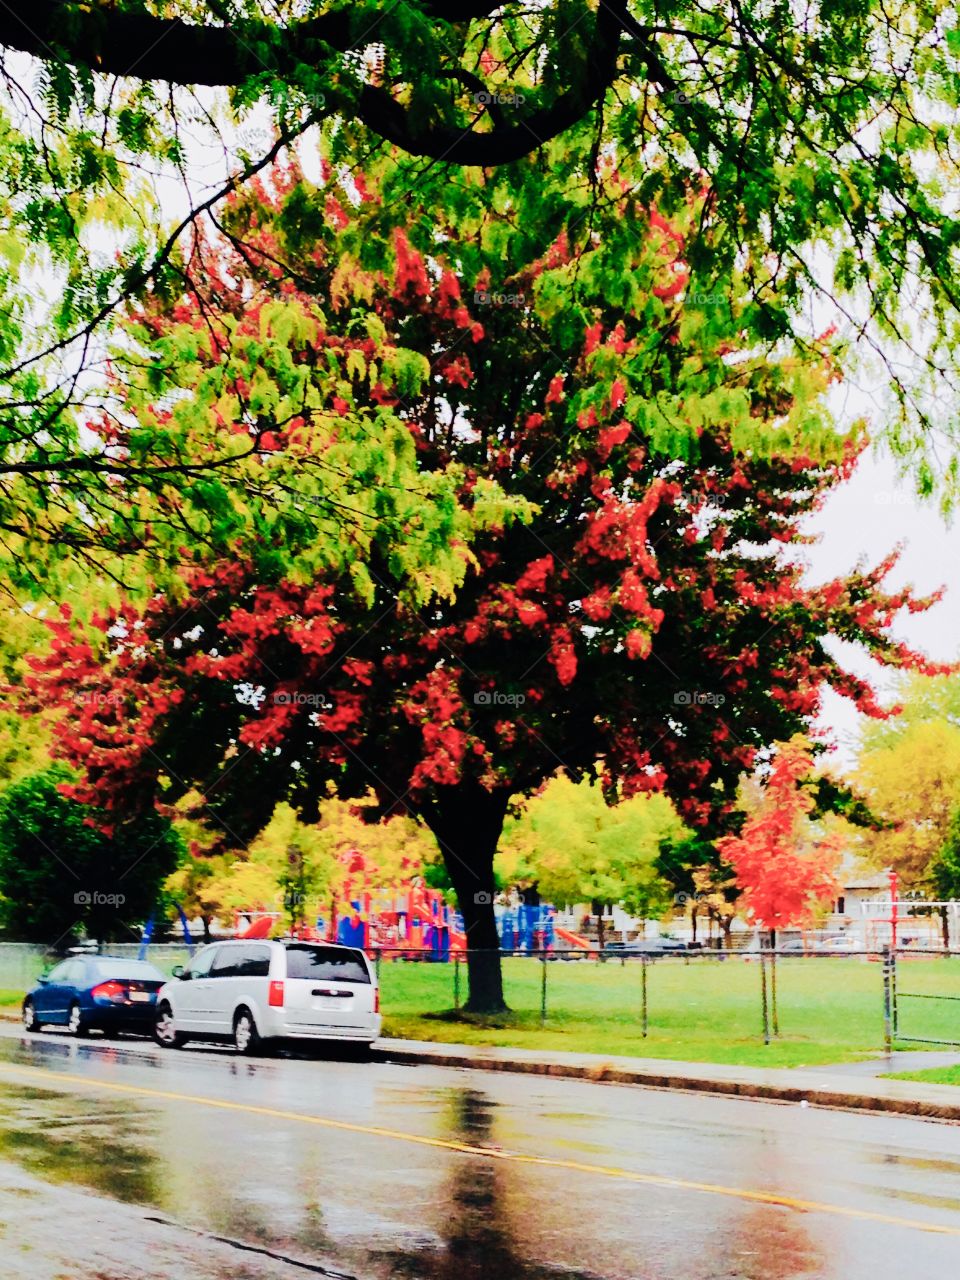 Autumn Tree 02-Octobre 24 2014- Montreal, Quebec, Canada